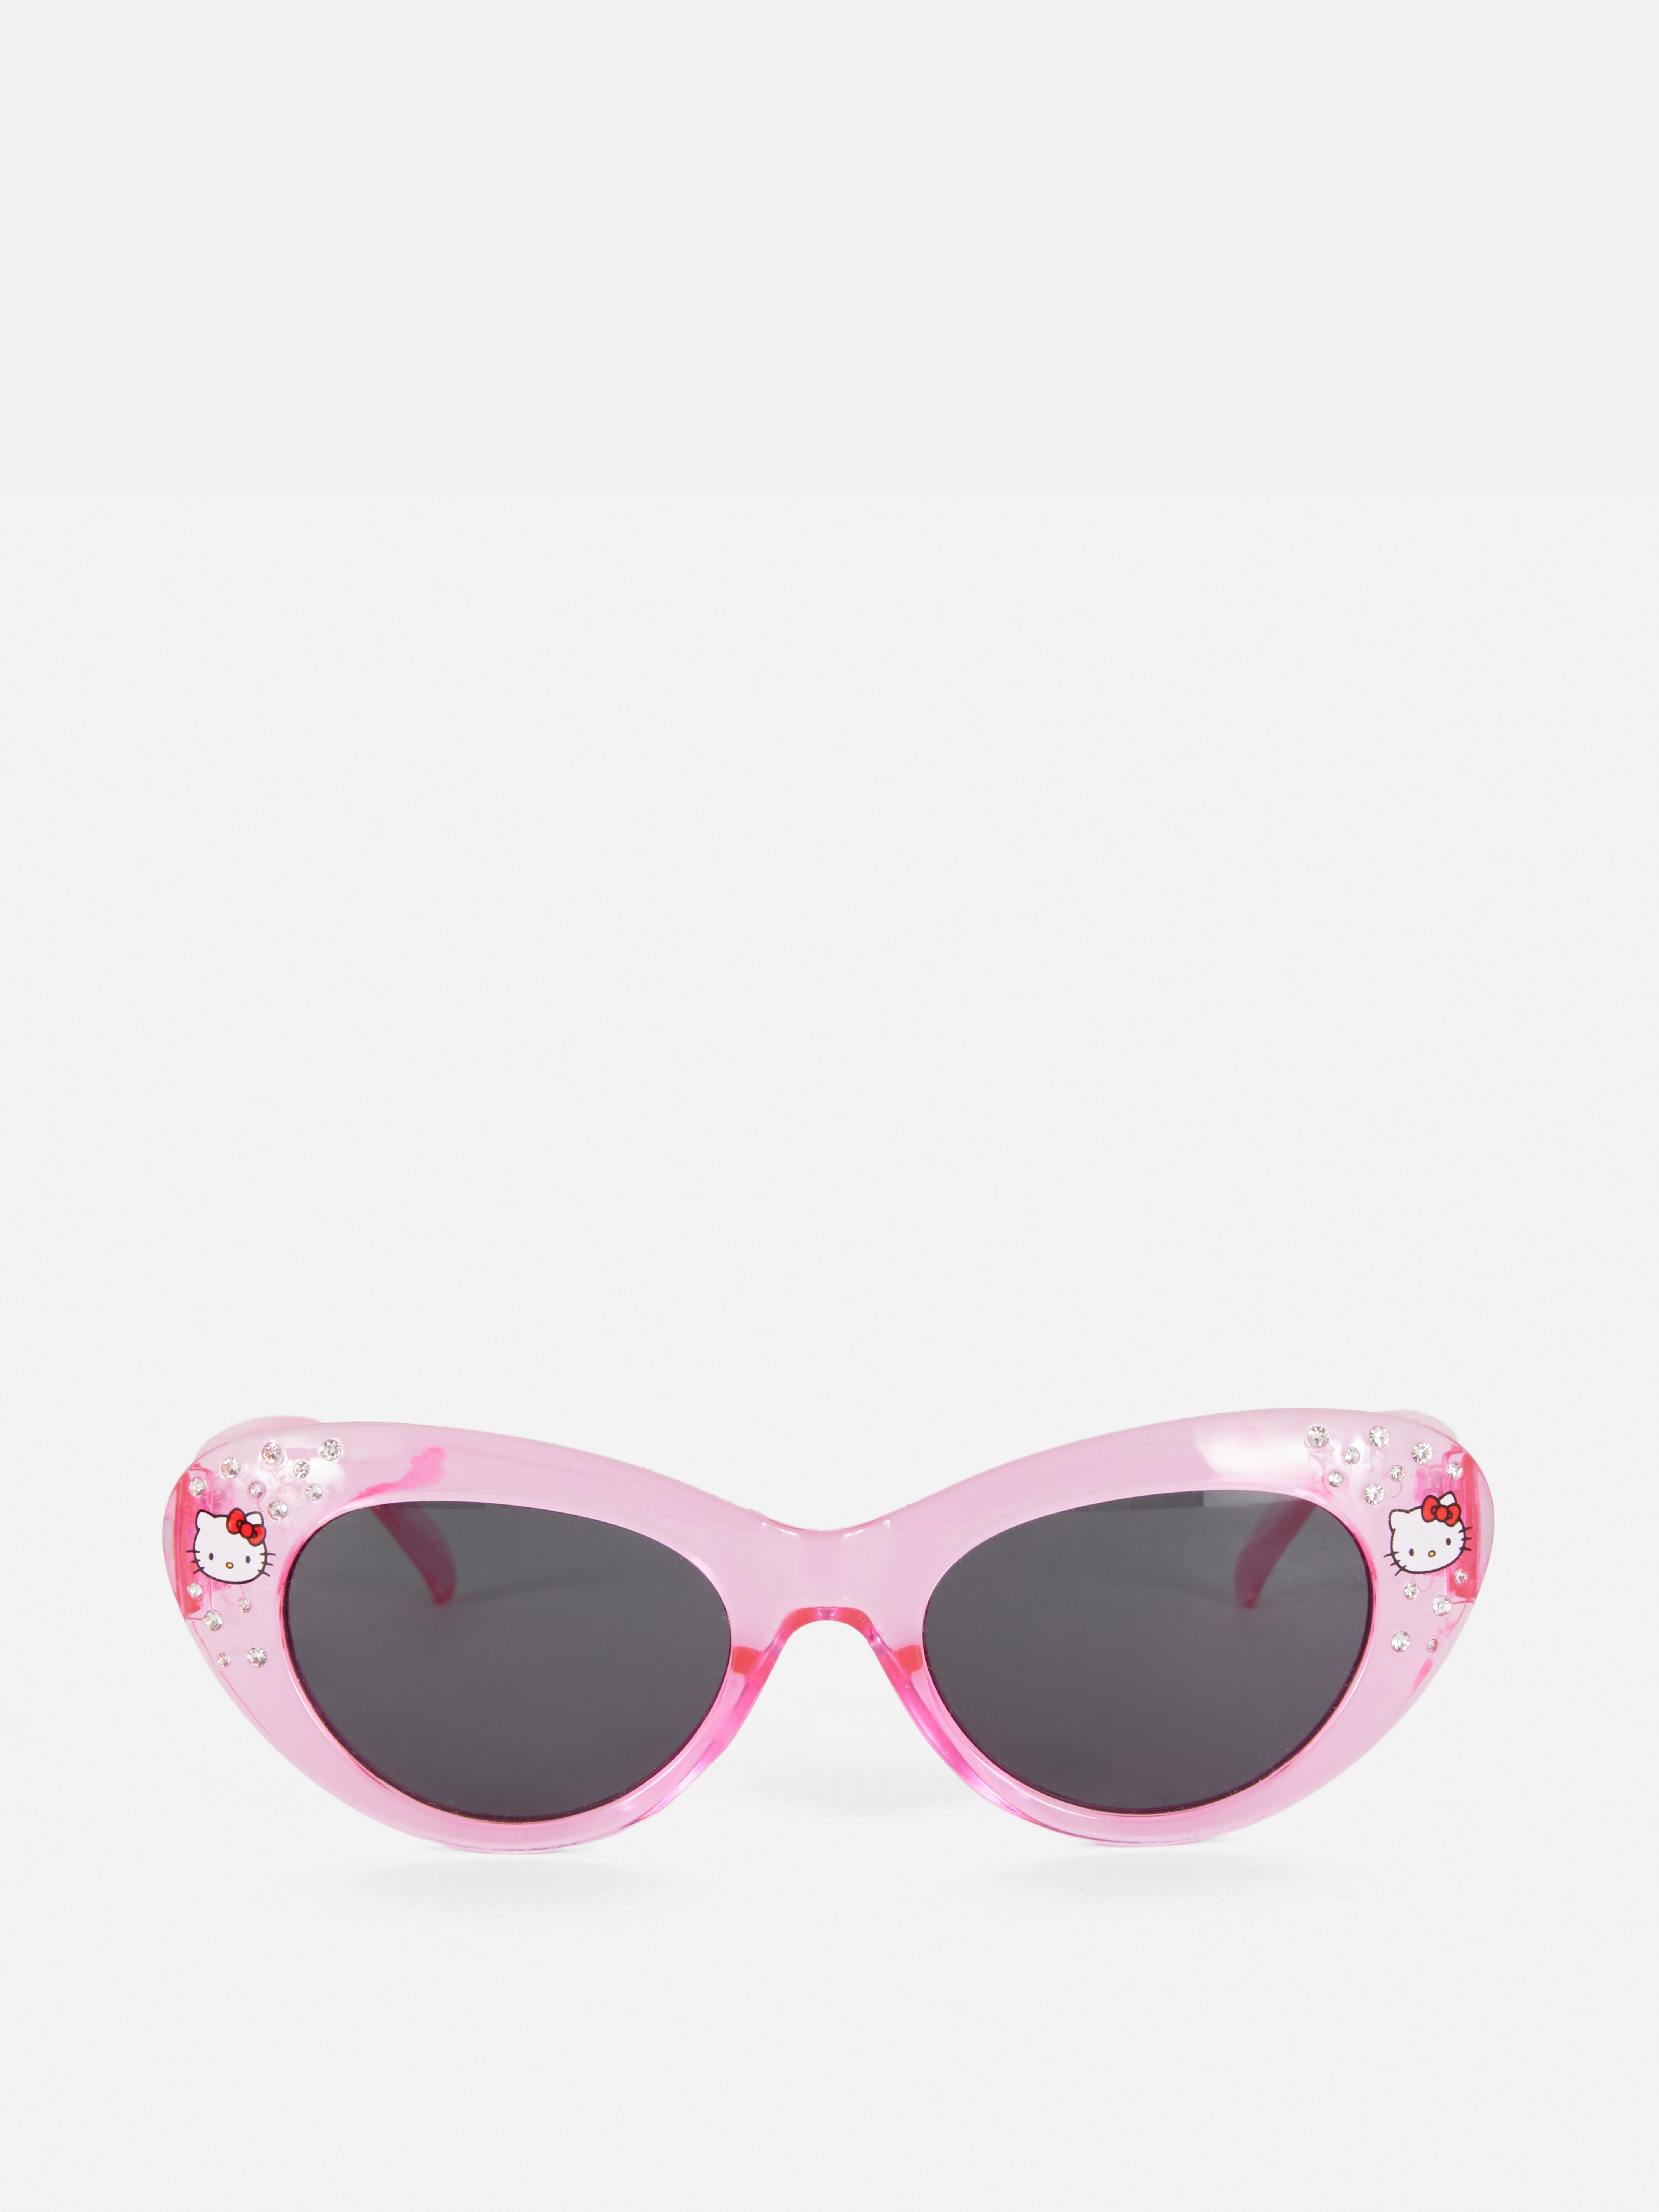 Hello Kitty 50th Anniversary Sunglasses